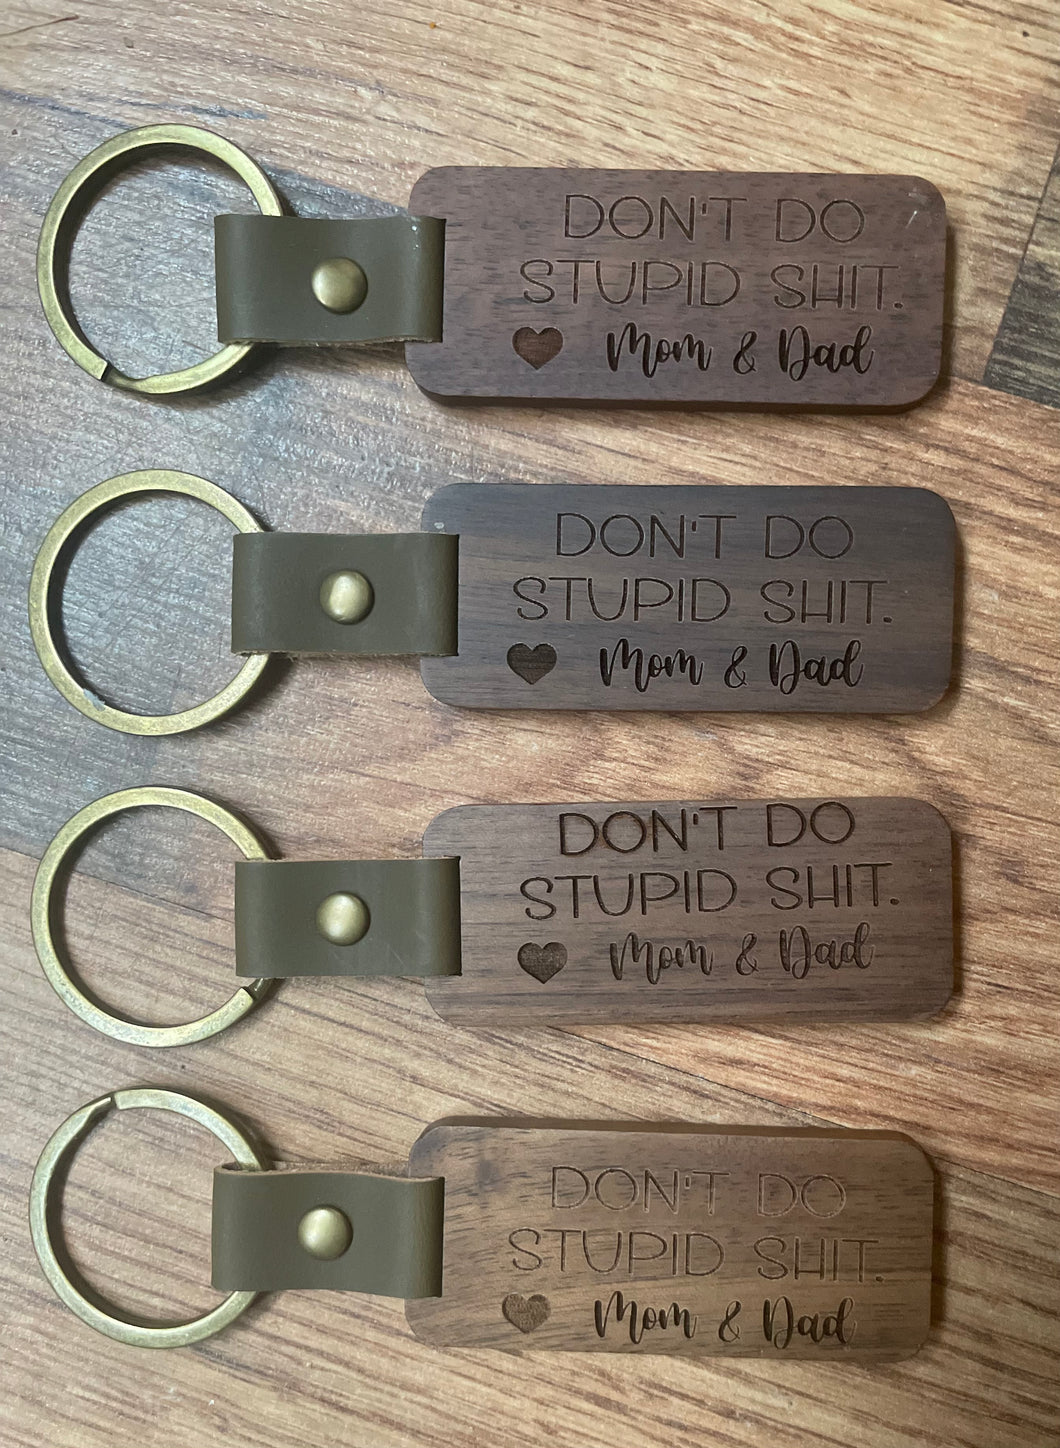 Don’t do stupid shit - Love, Mom & Dad